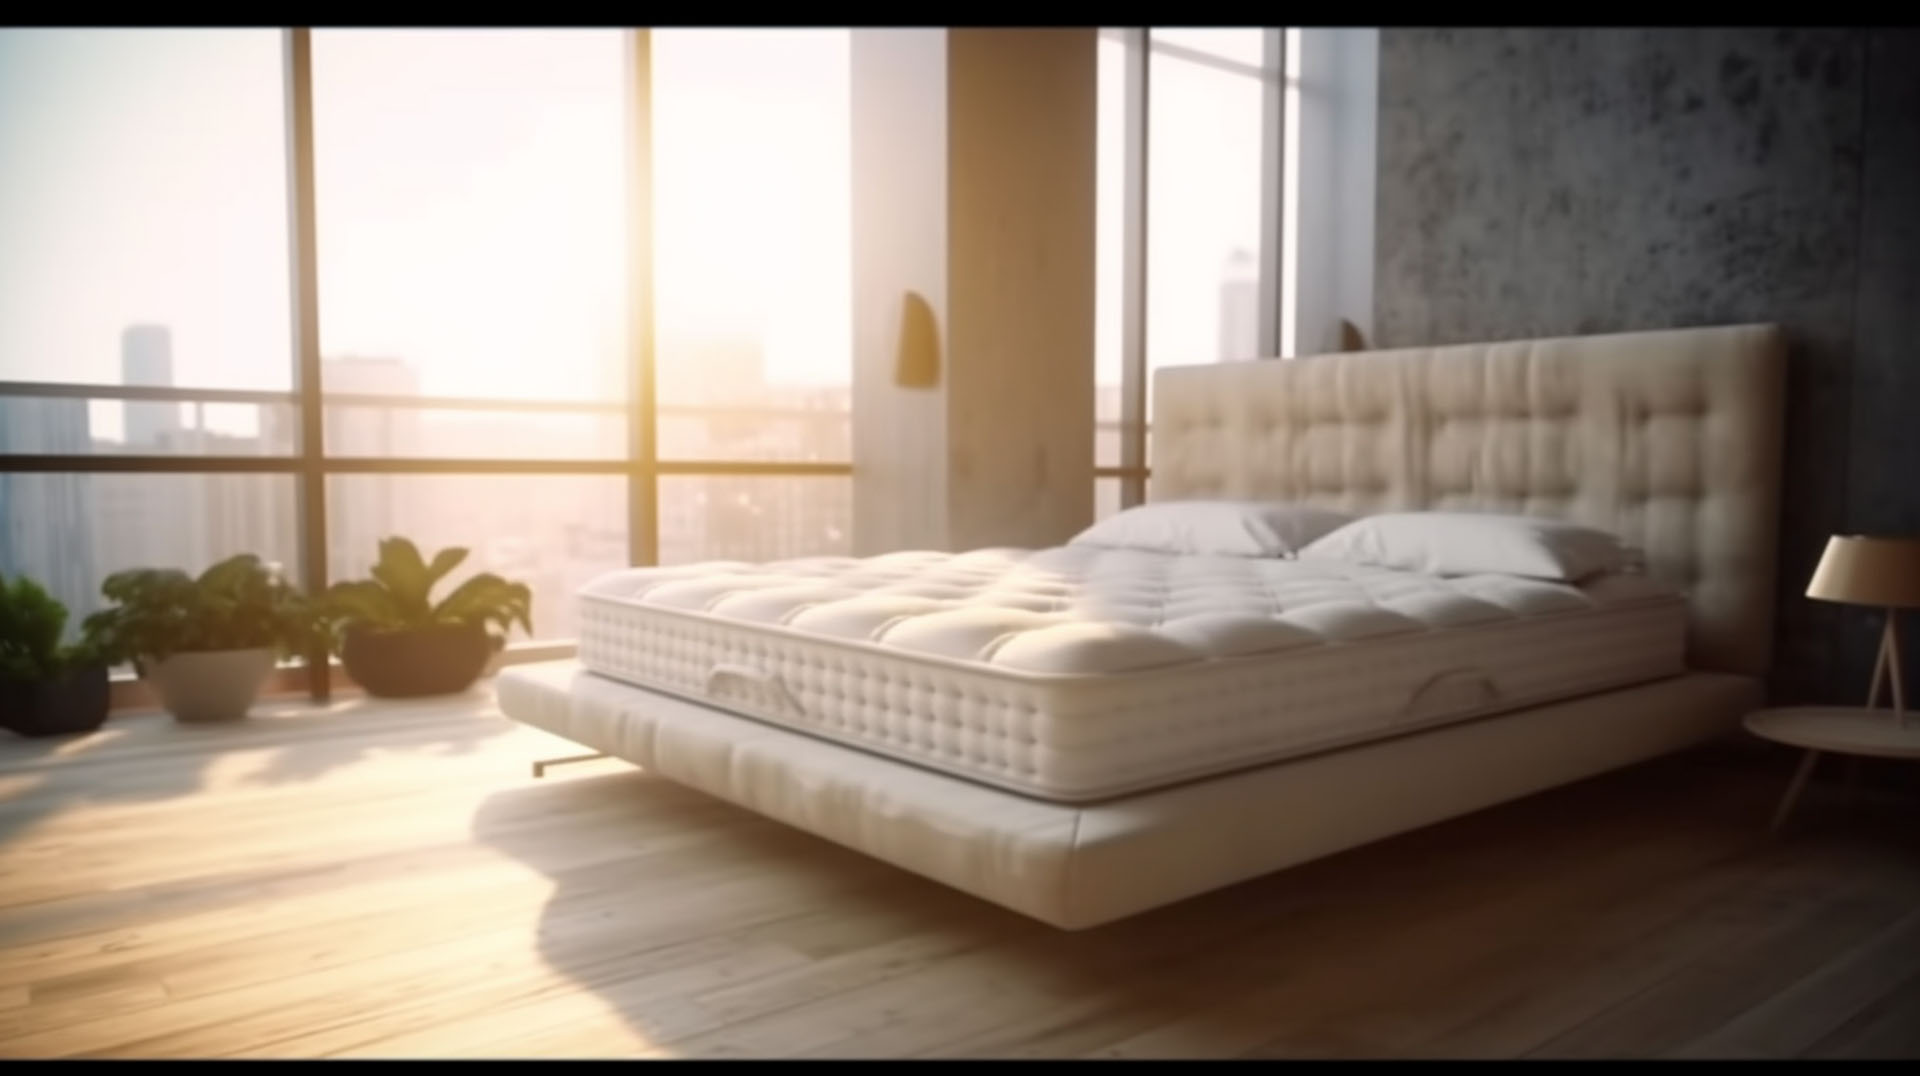 San Bernardino organic mattresses are the perfect way to get a good night's sleep without sacrificing comfort or your health